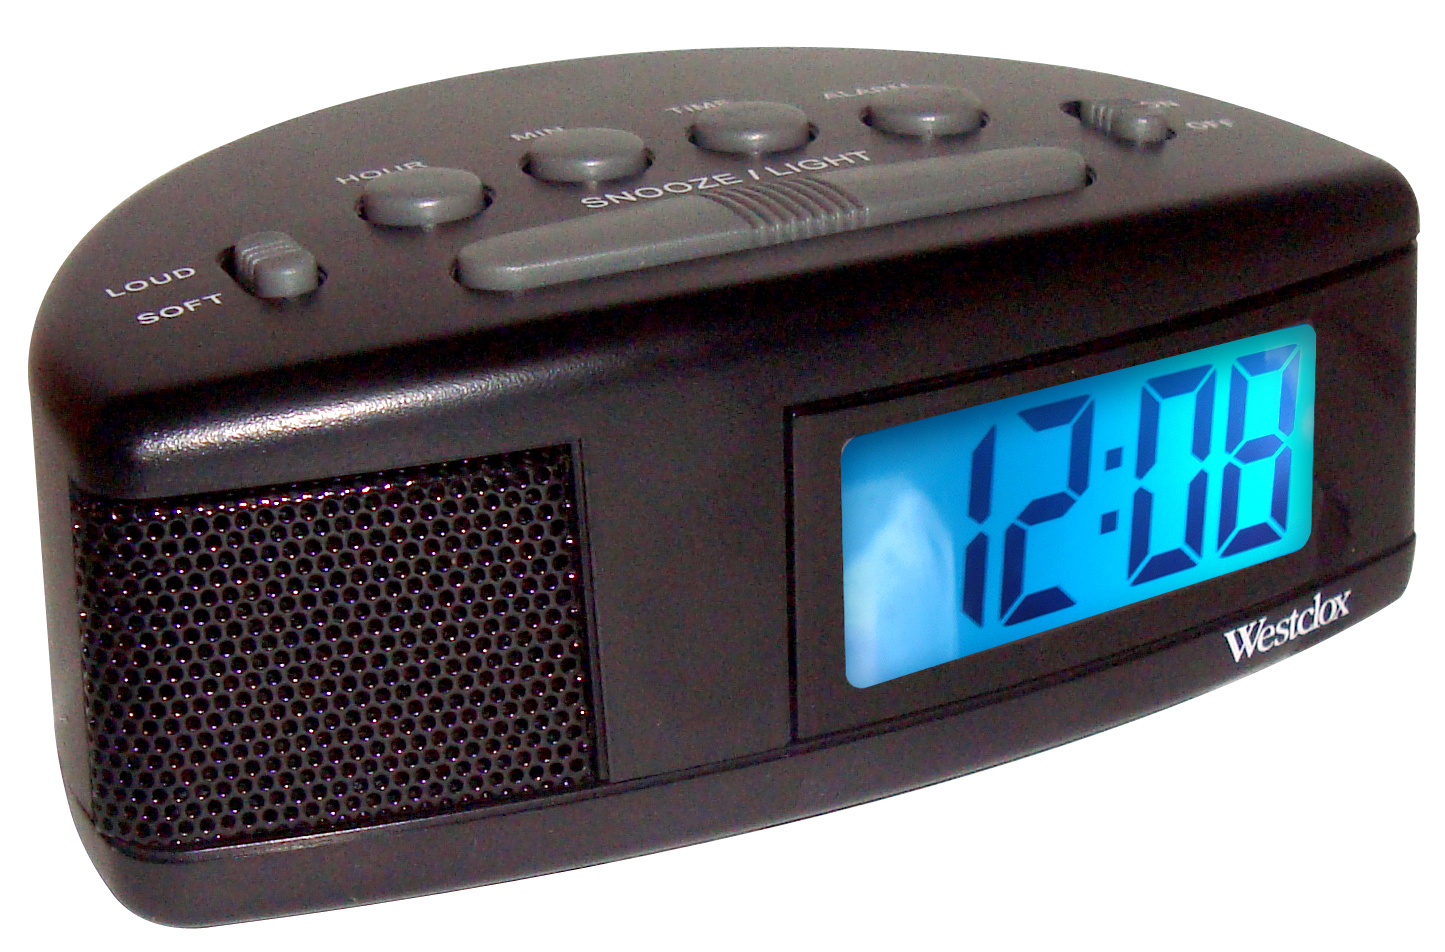 Super Loud LCD Alarm Clock 47547